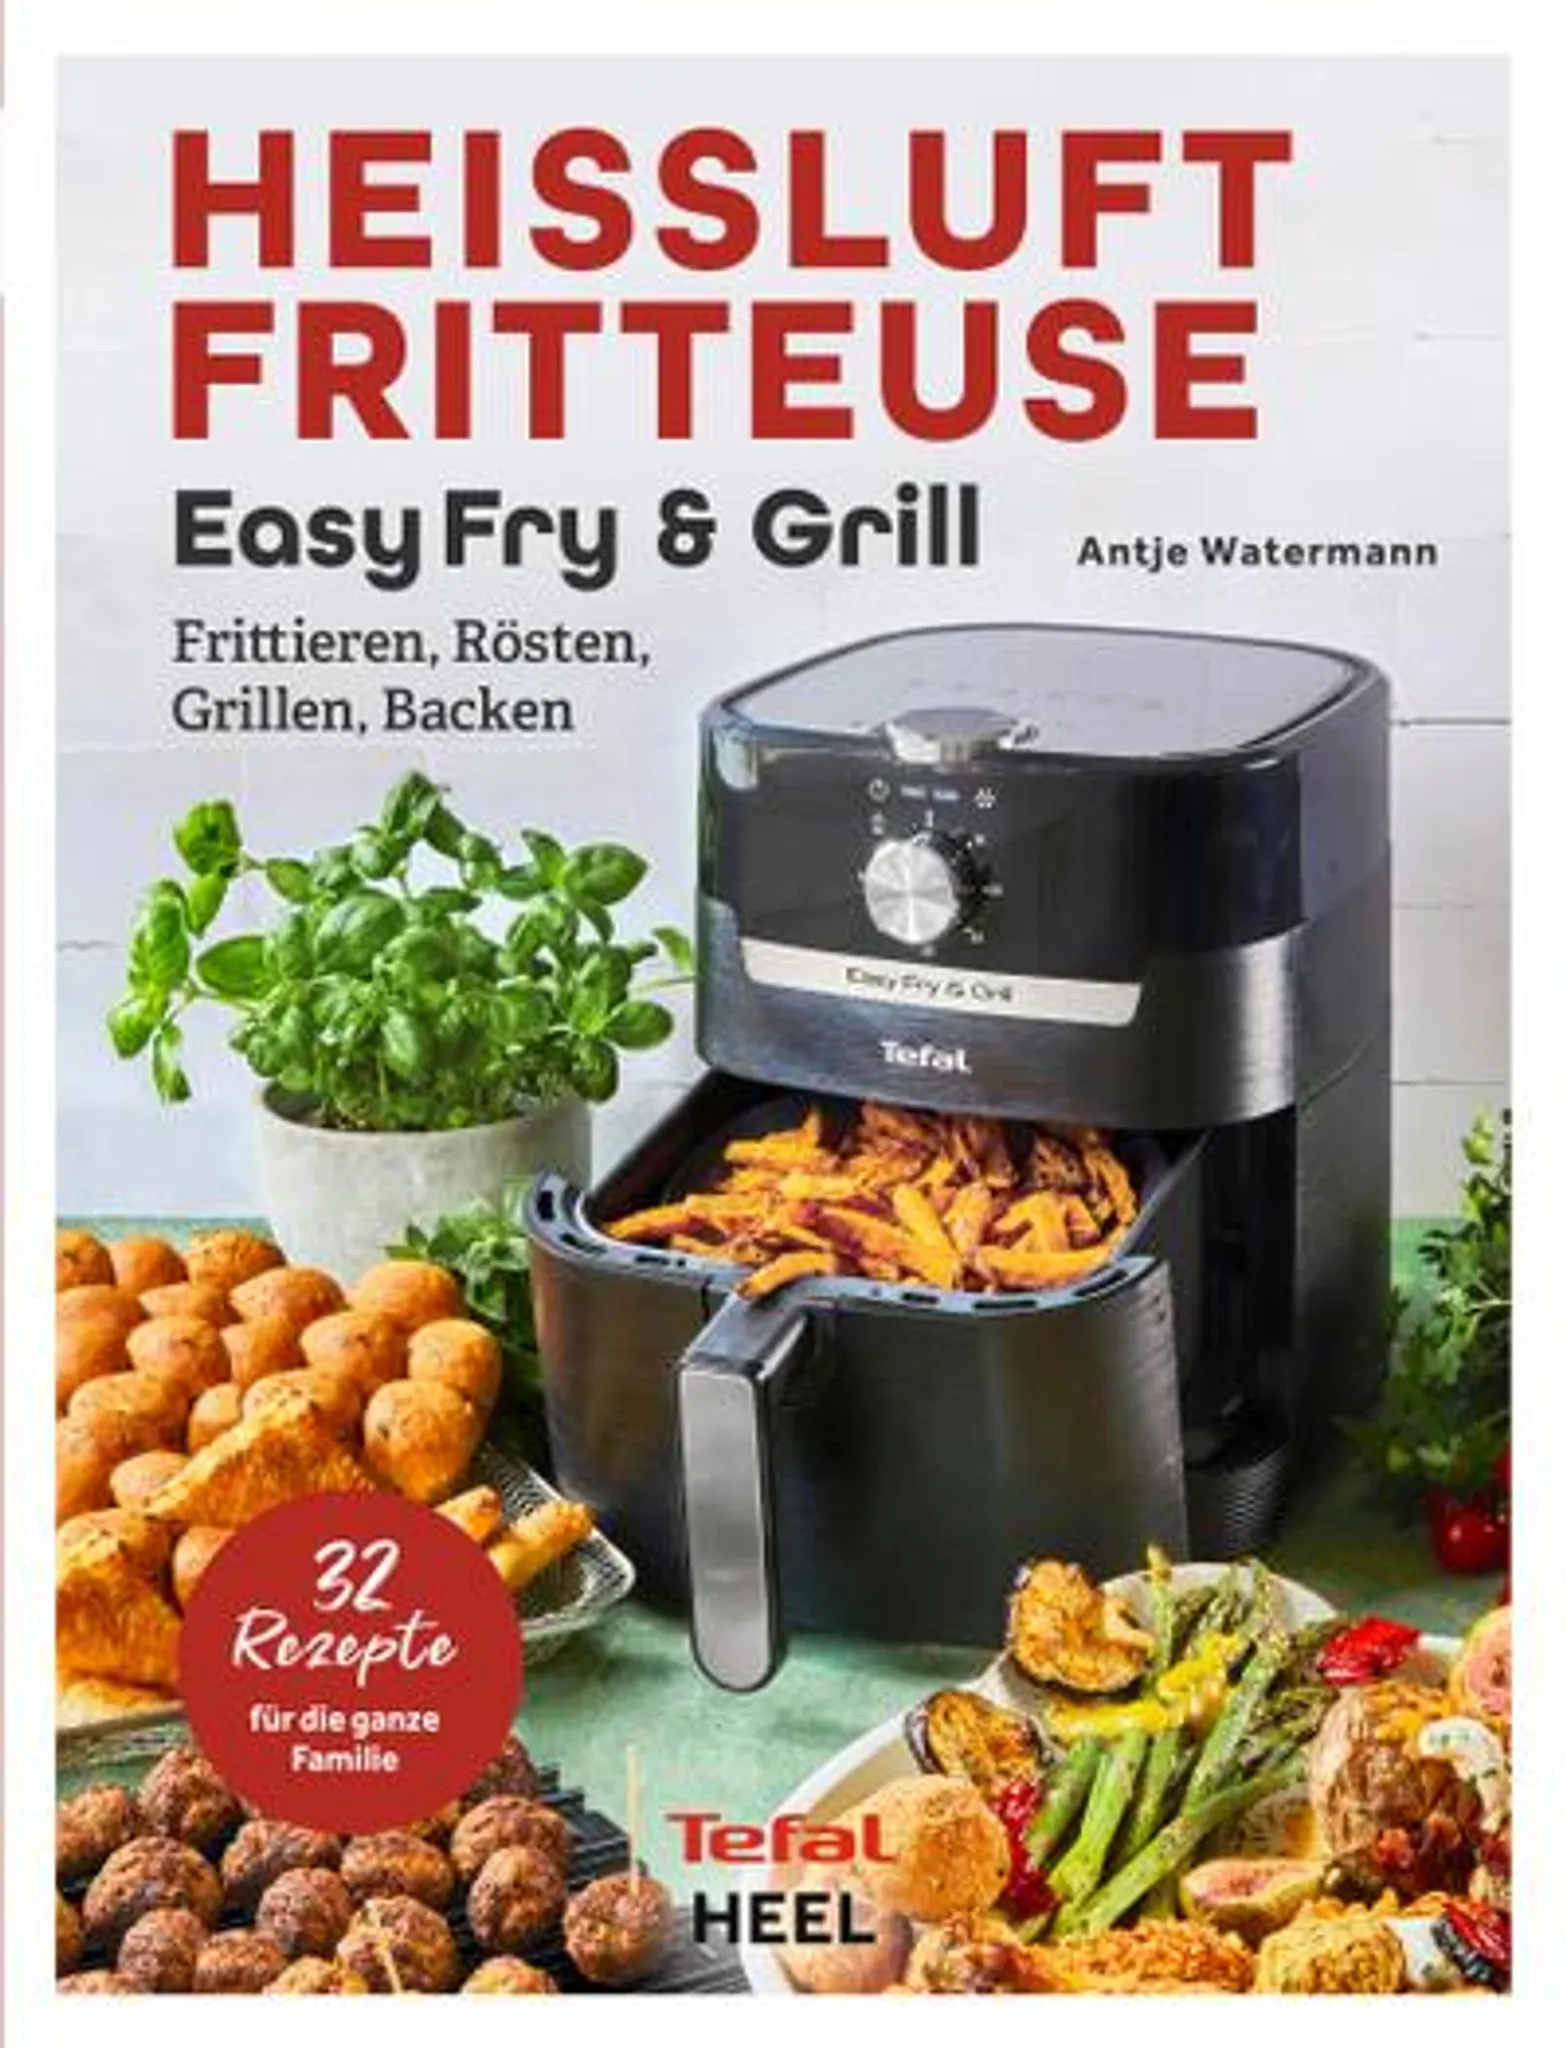 & Grill Tefal: Easy Fry Heißluftfritteuse